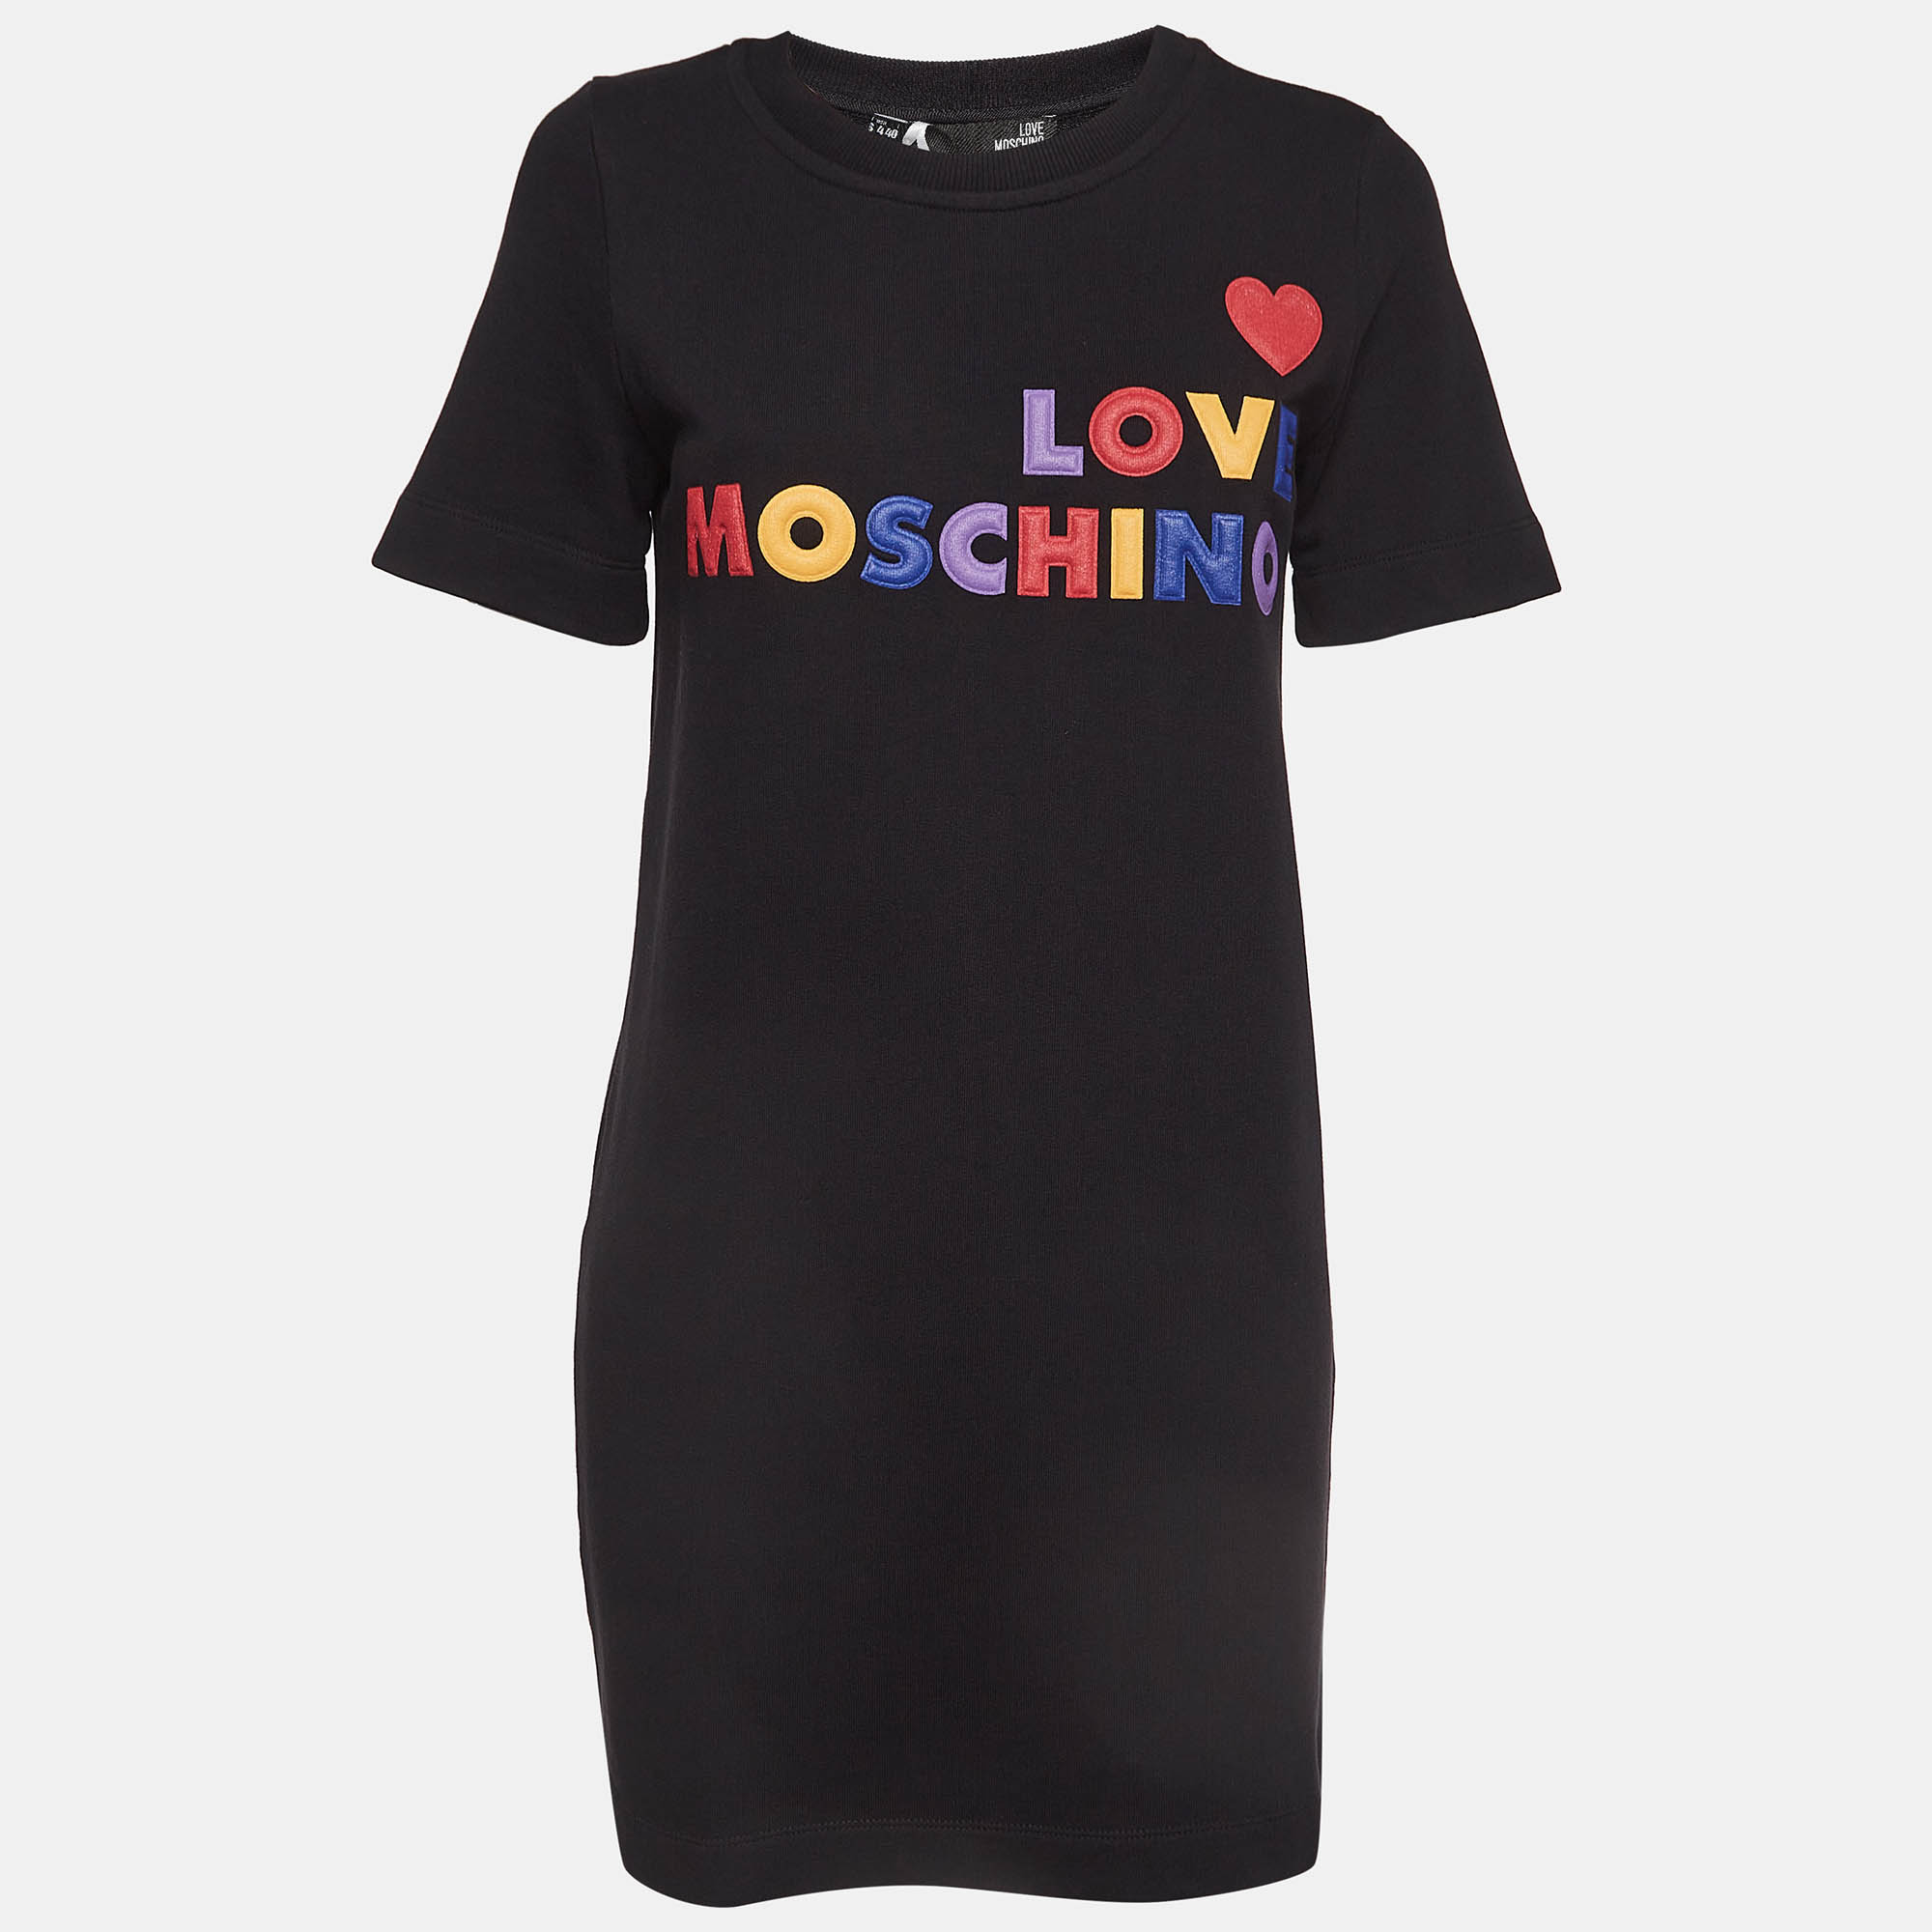 

Love Moschino Black Printed T-shirt Dress S